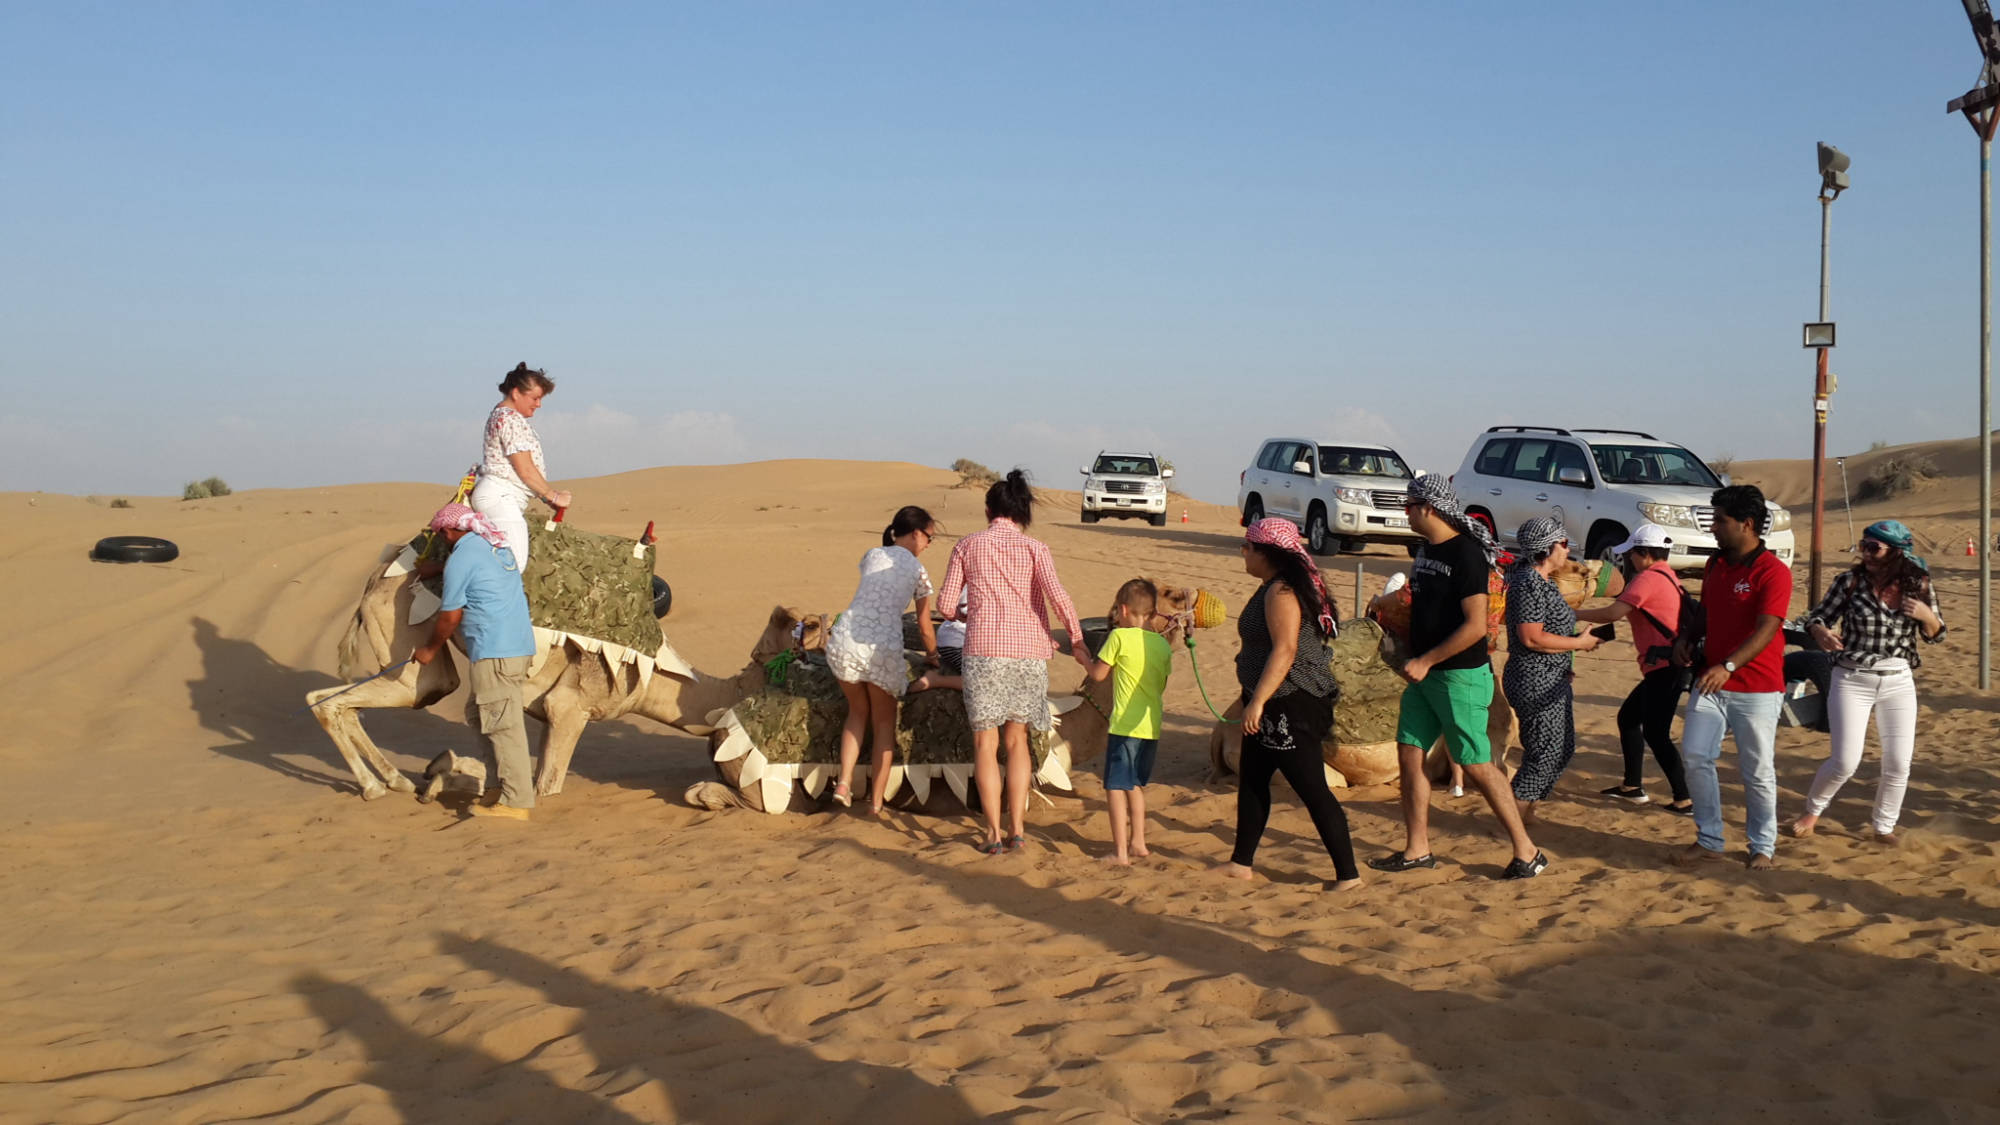 ОАЭ, экскурсия "Сафари в пустыне на джипах"